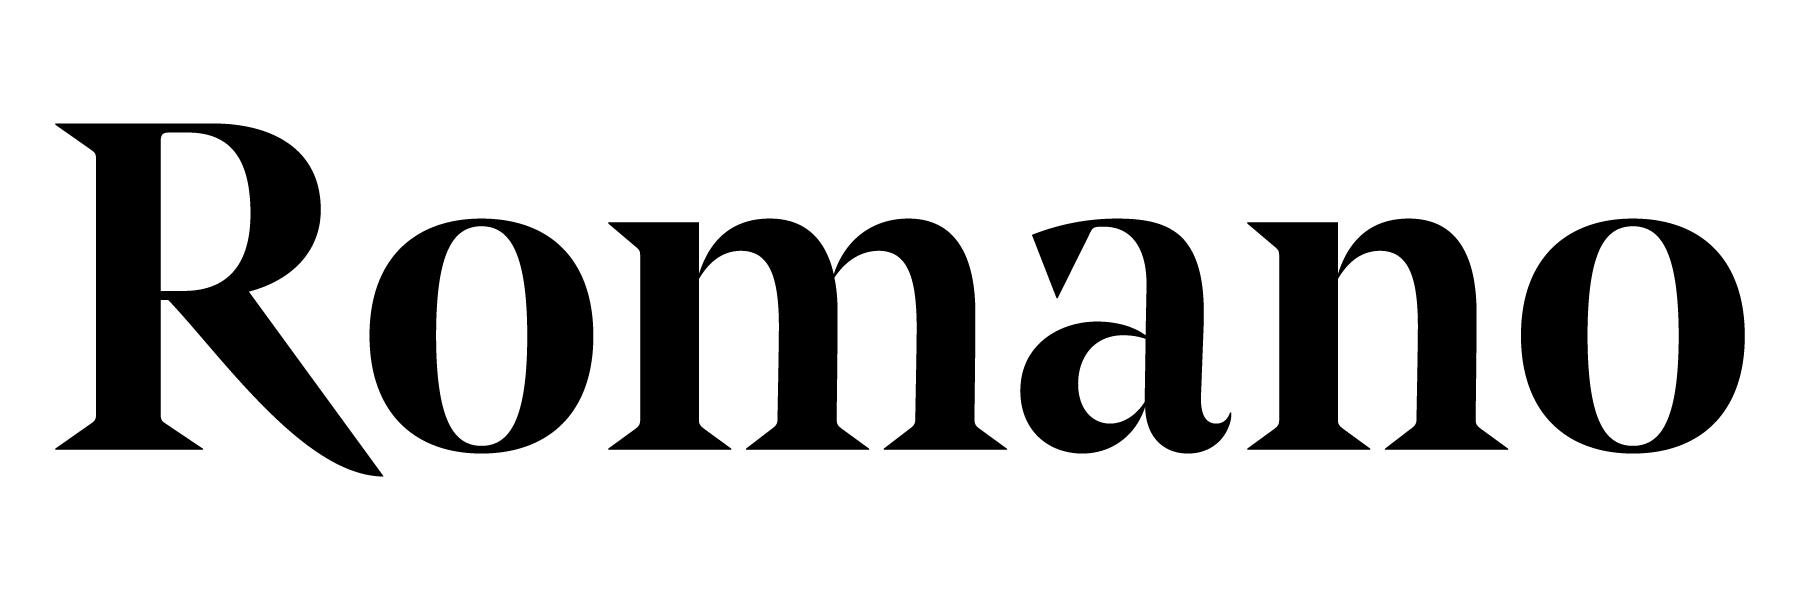 G Romano logo